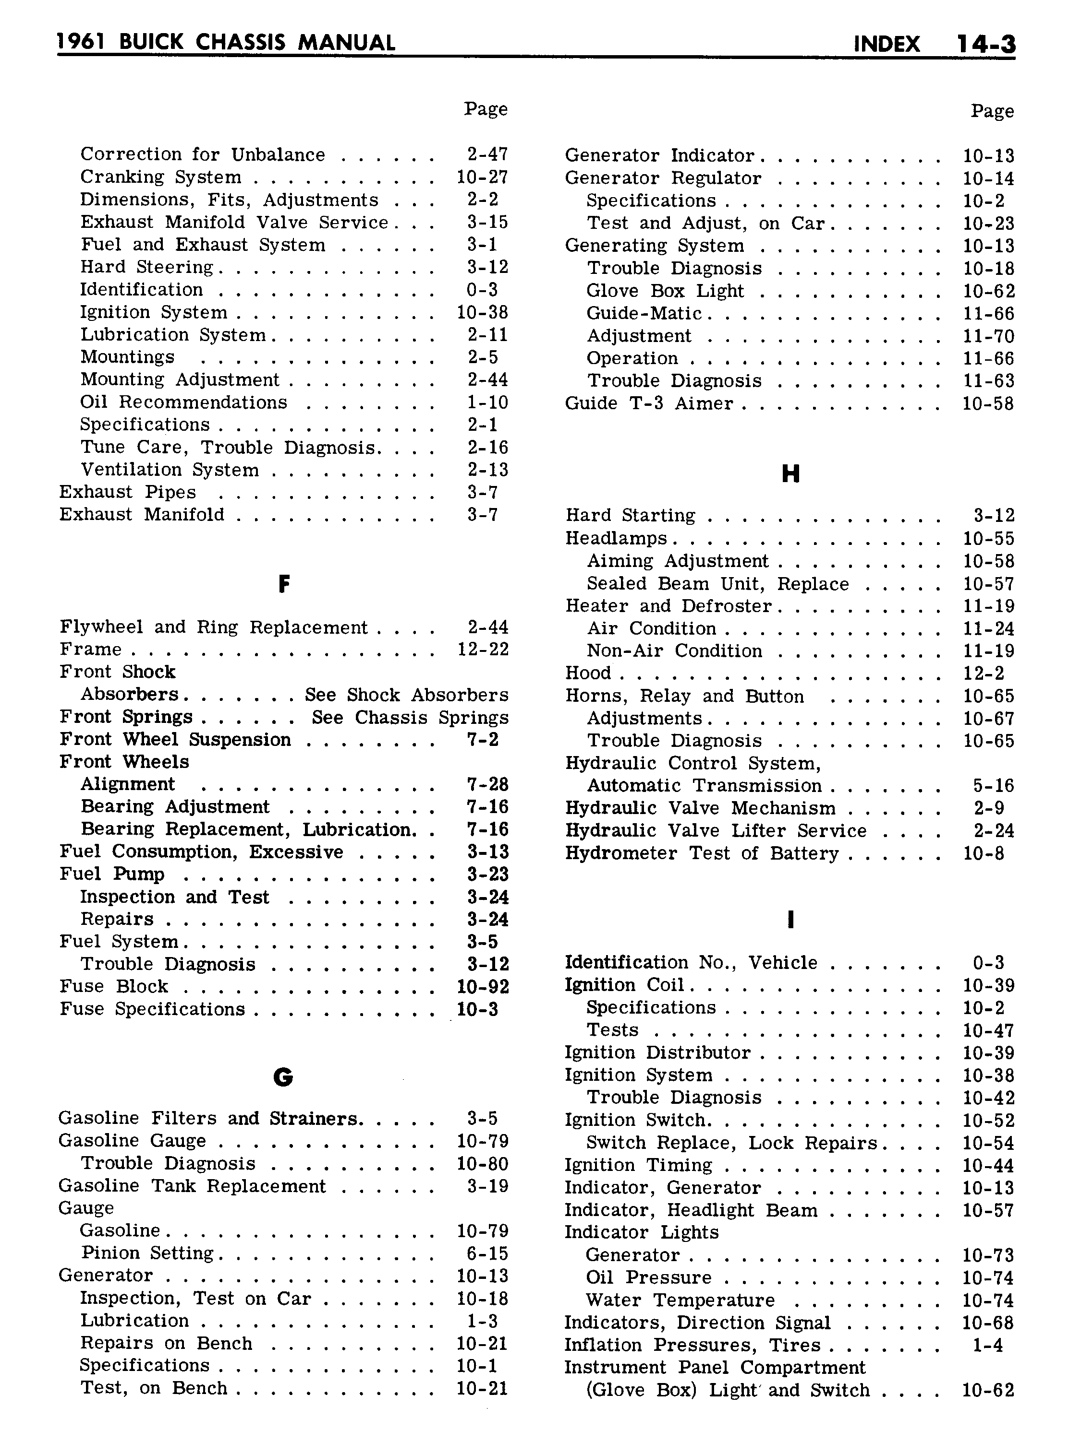 n_13 1961 Buick Shop Manual - Index-003-003.jpg